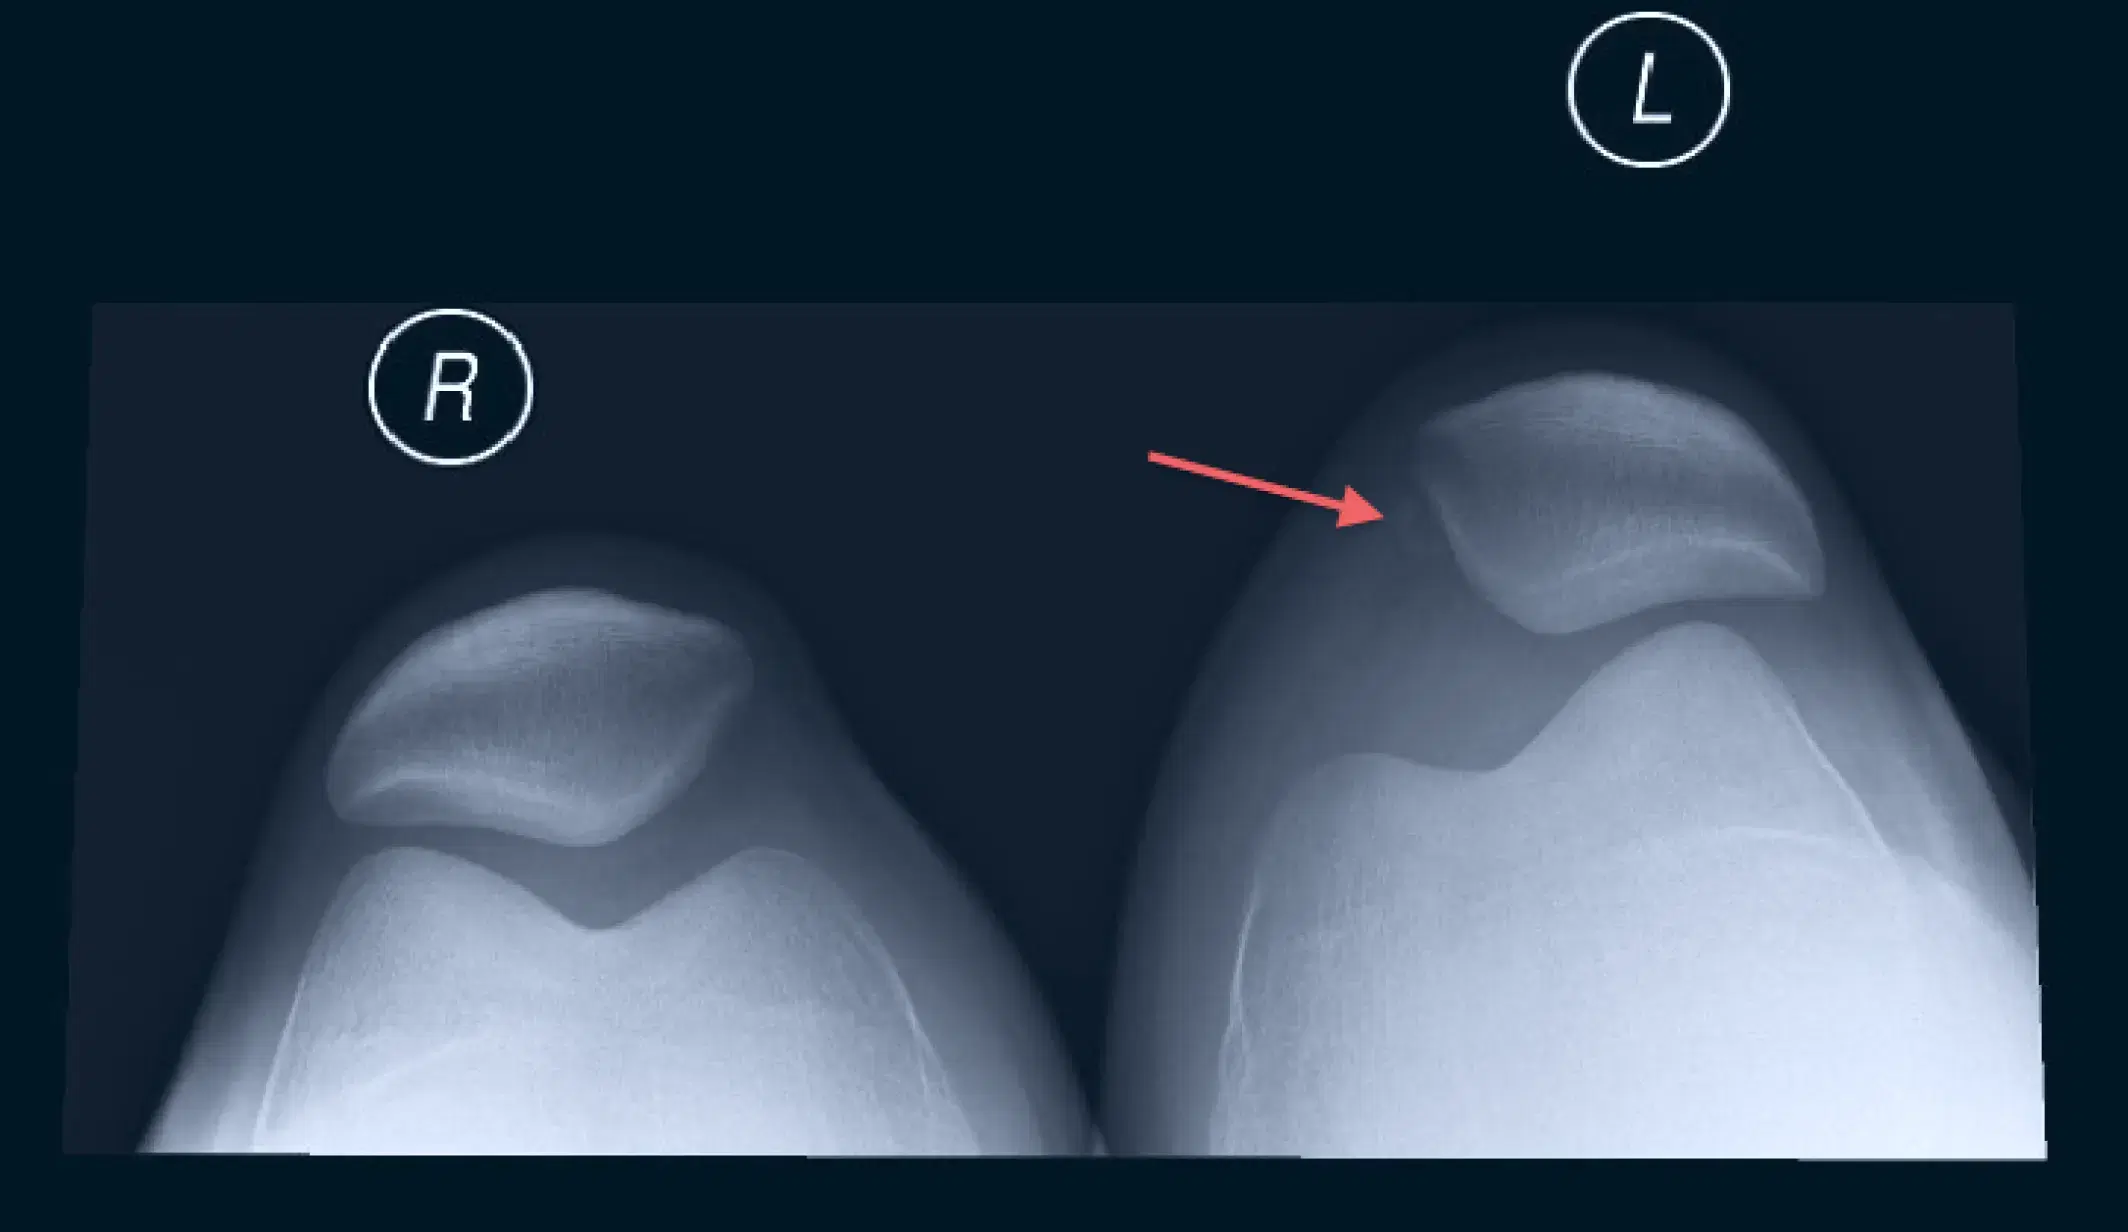 Patella subluxation (partial dislocation) on the right